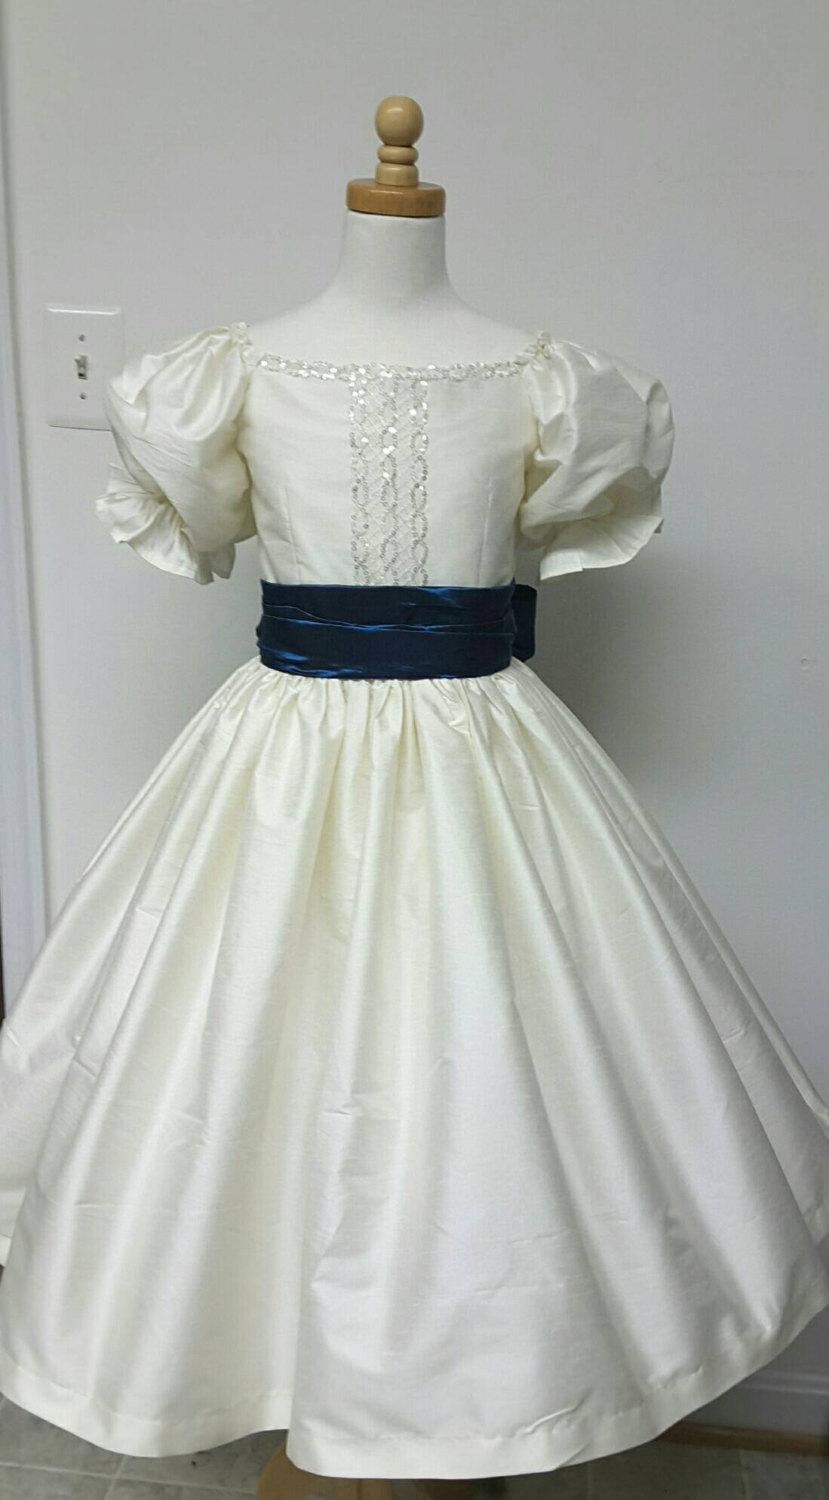 زفاف - Princess Flower Girl Dress with Ruffles & Pearls, Sequin Bodice, and Puffy Sleeves, Girls Victorian Style Dress for Weddings, Birthday Party